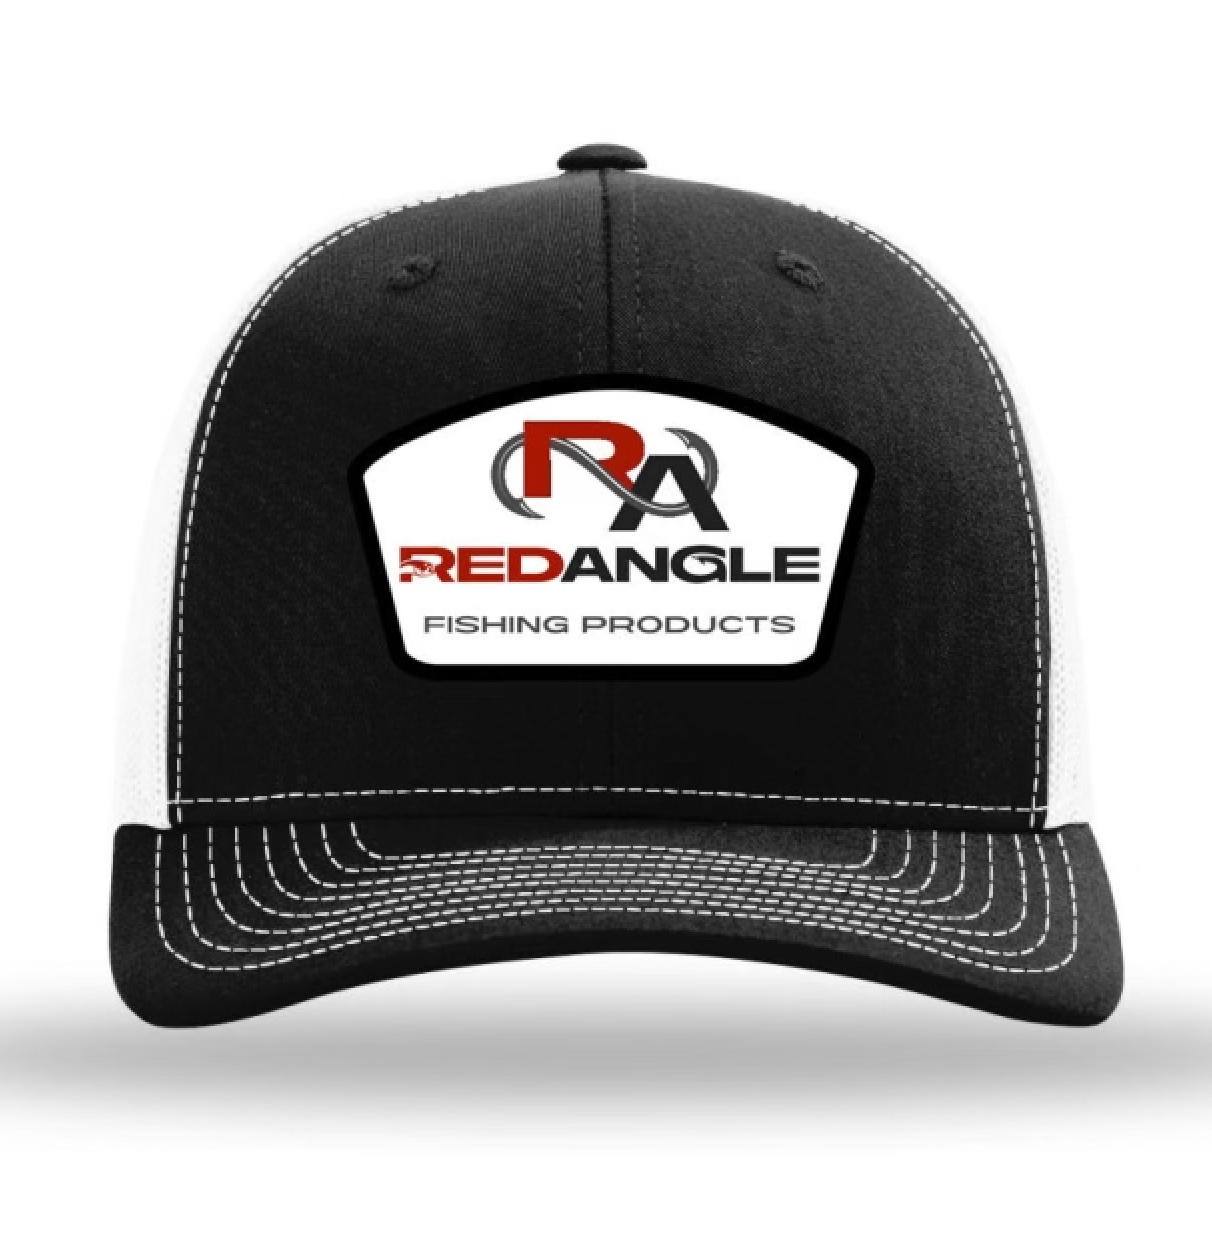 Trucker Fishing Hats - Red Angle Fishing